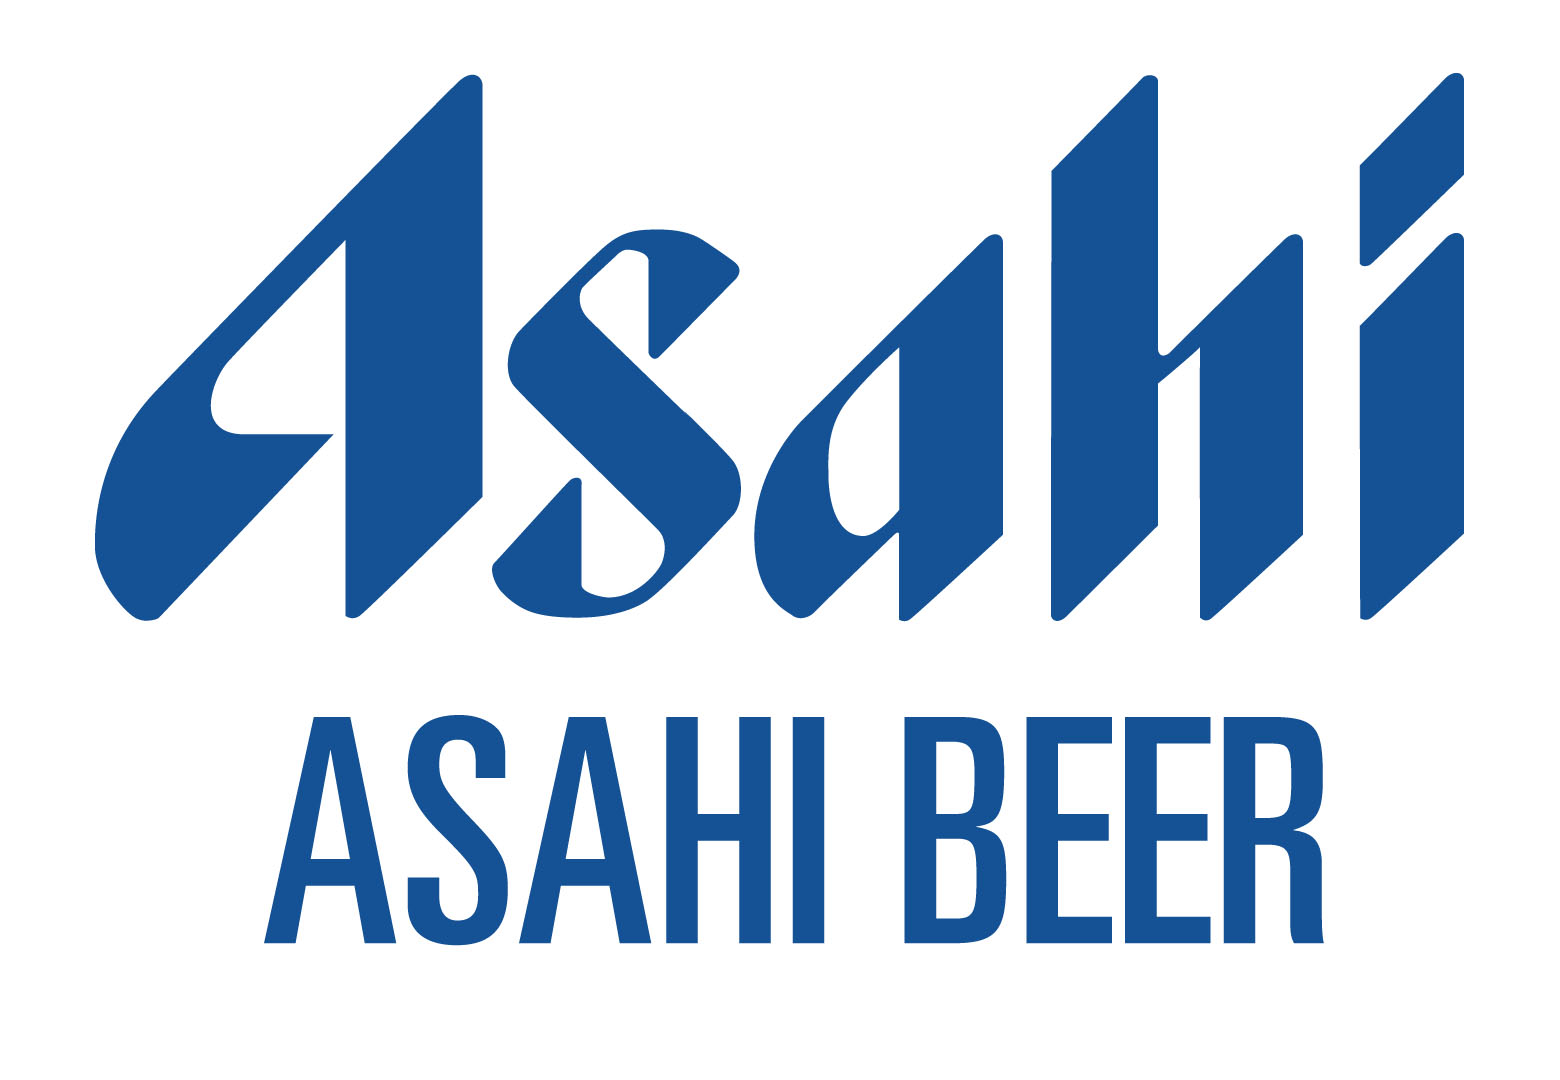 Asahi Logos